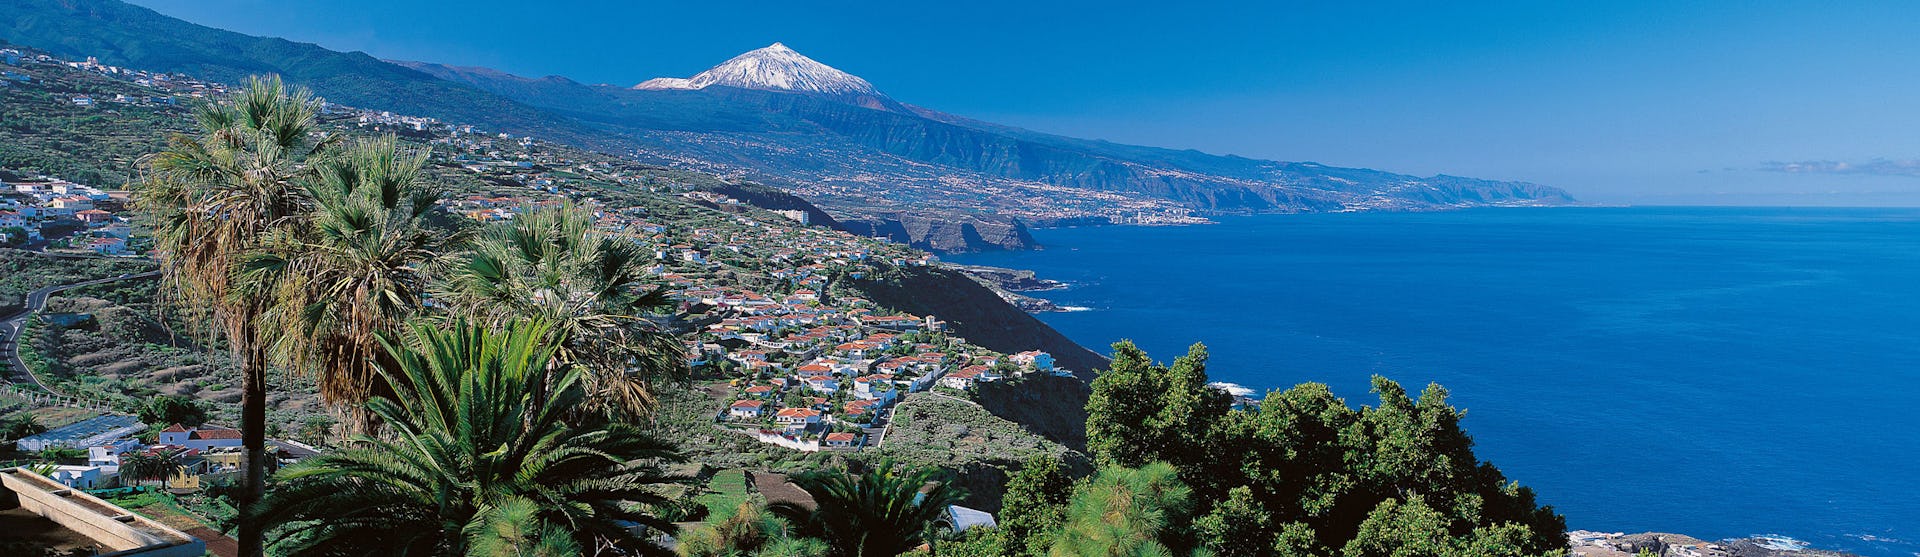 Vista panorámica de Tenerife